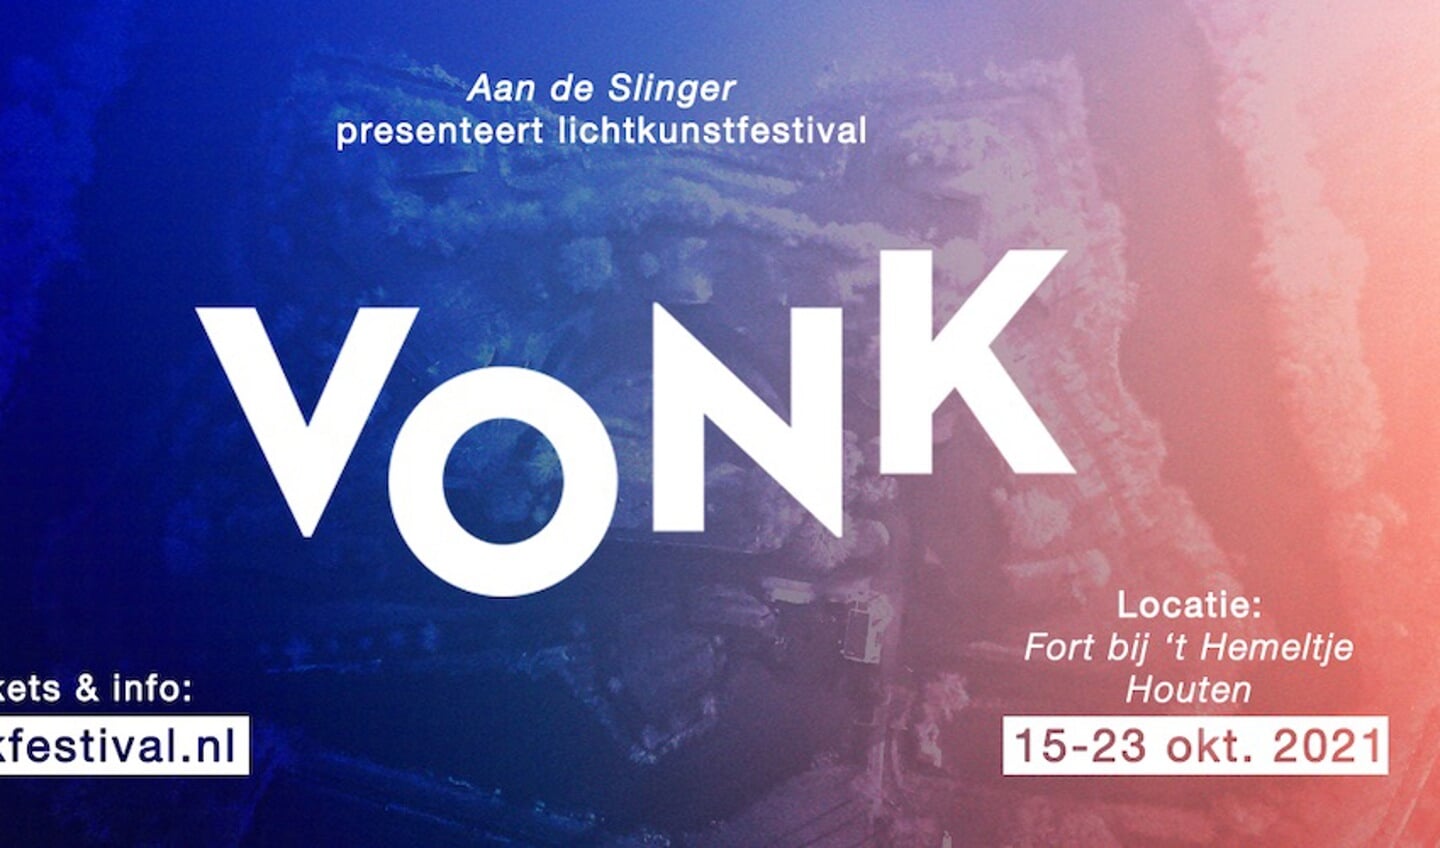 VONK festival